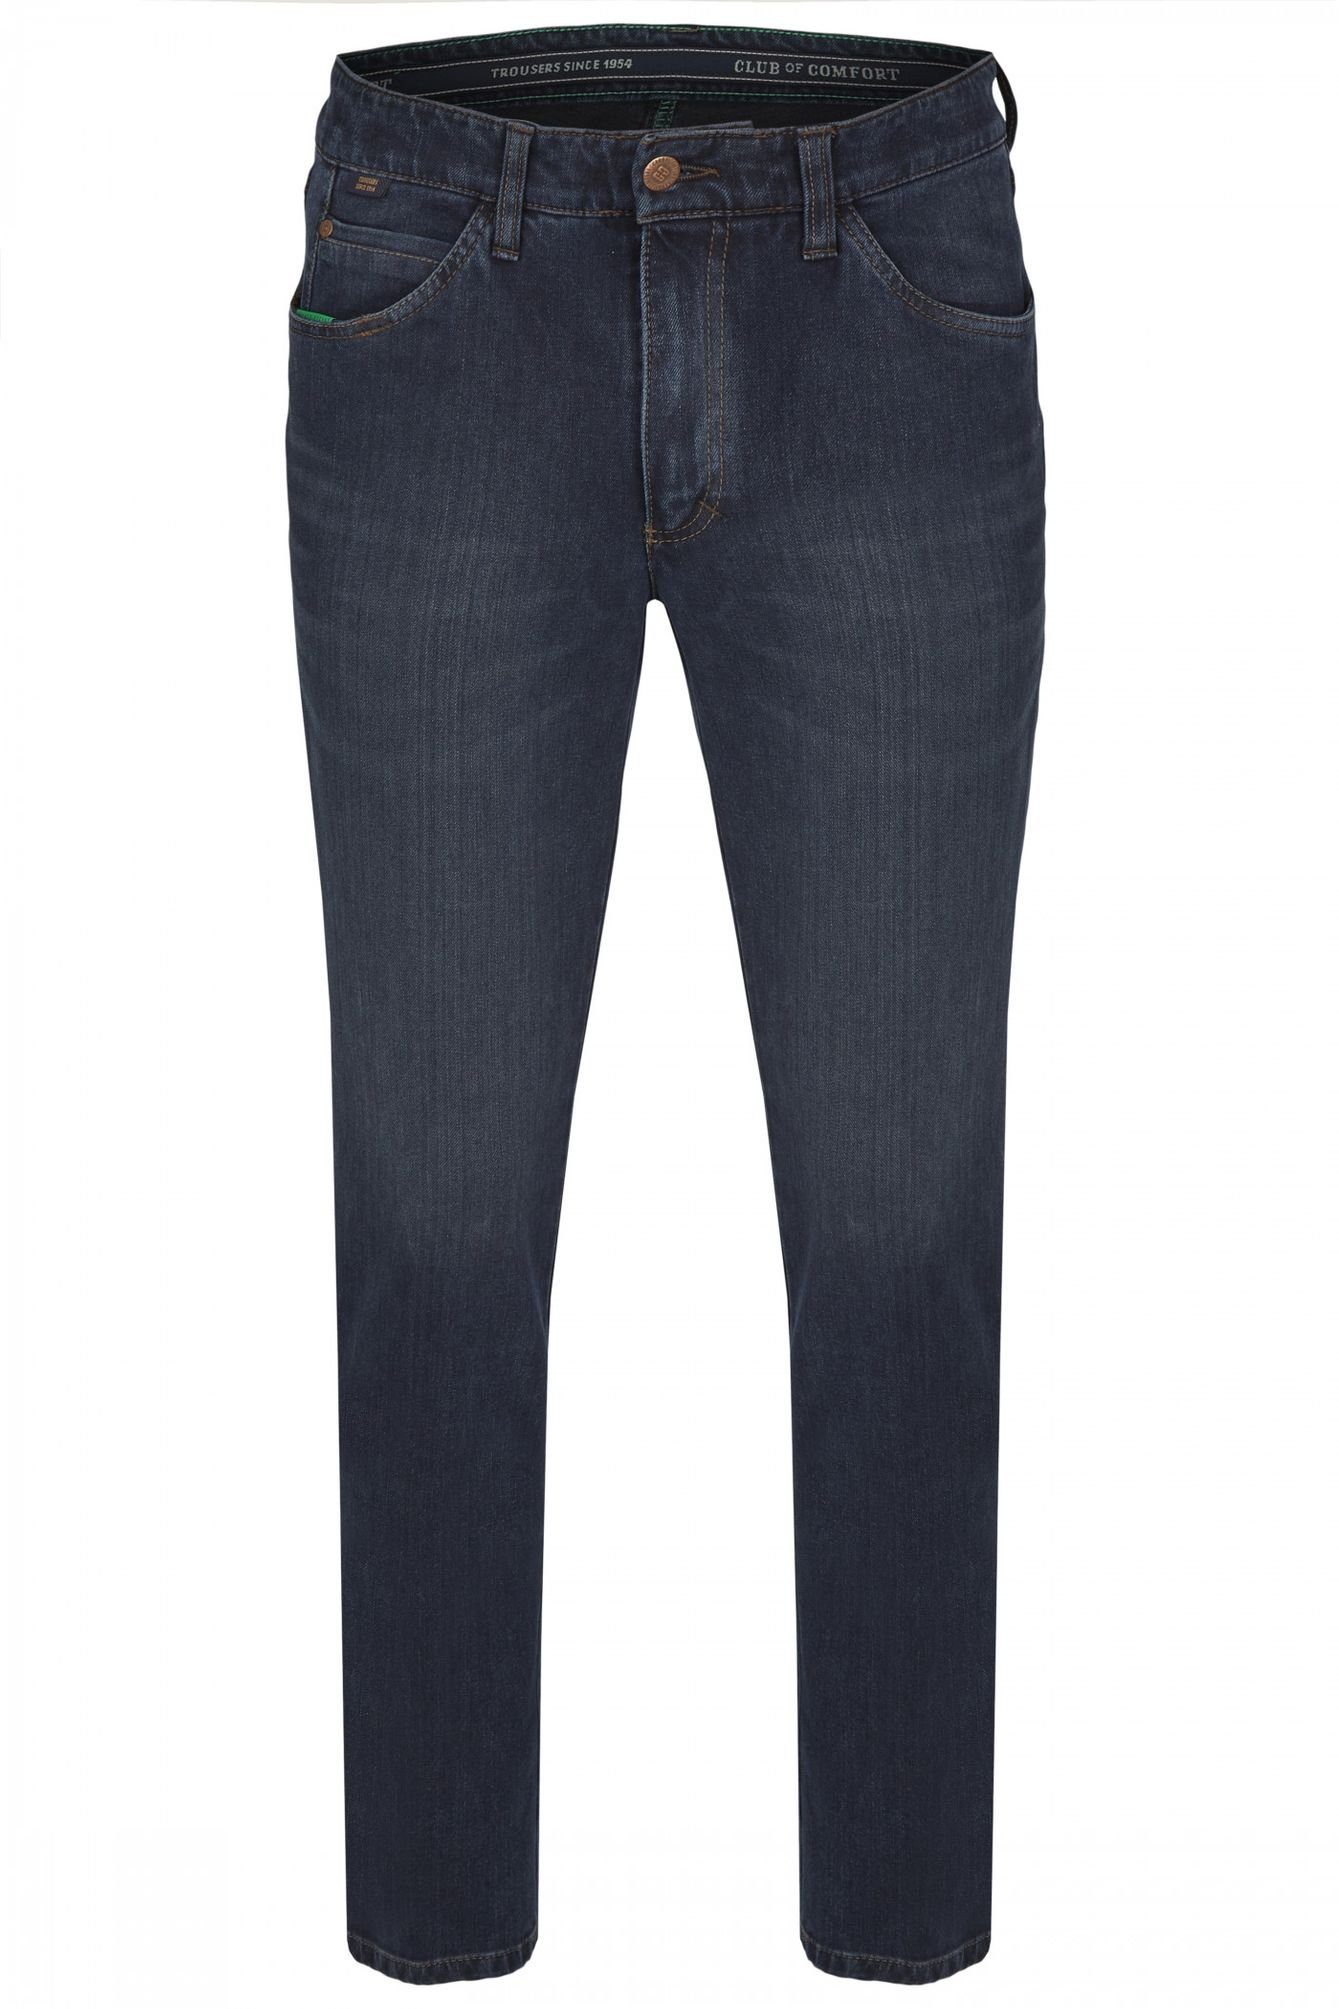 Club of Comfort 5-Pocket-Jeans Henry-X dunkelblau (941)